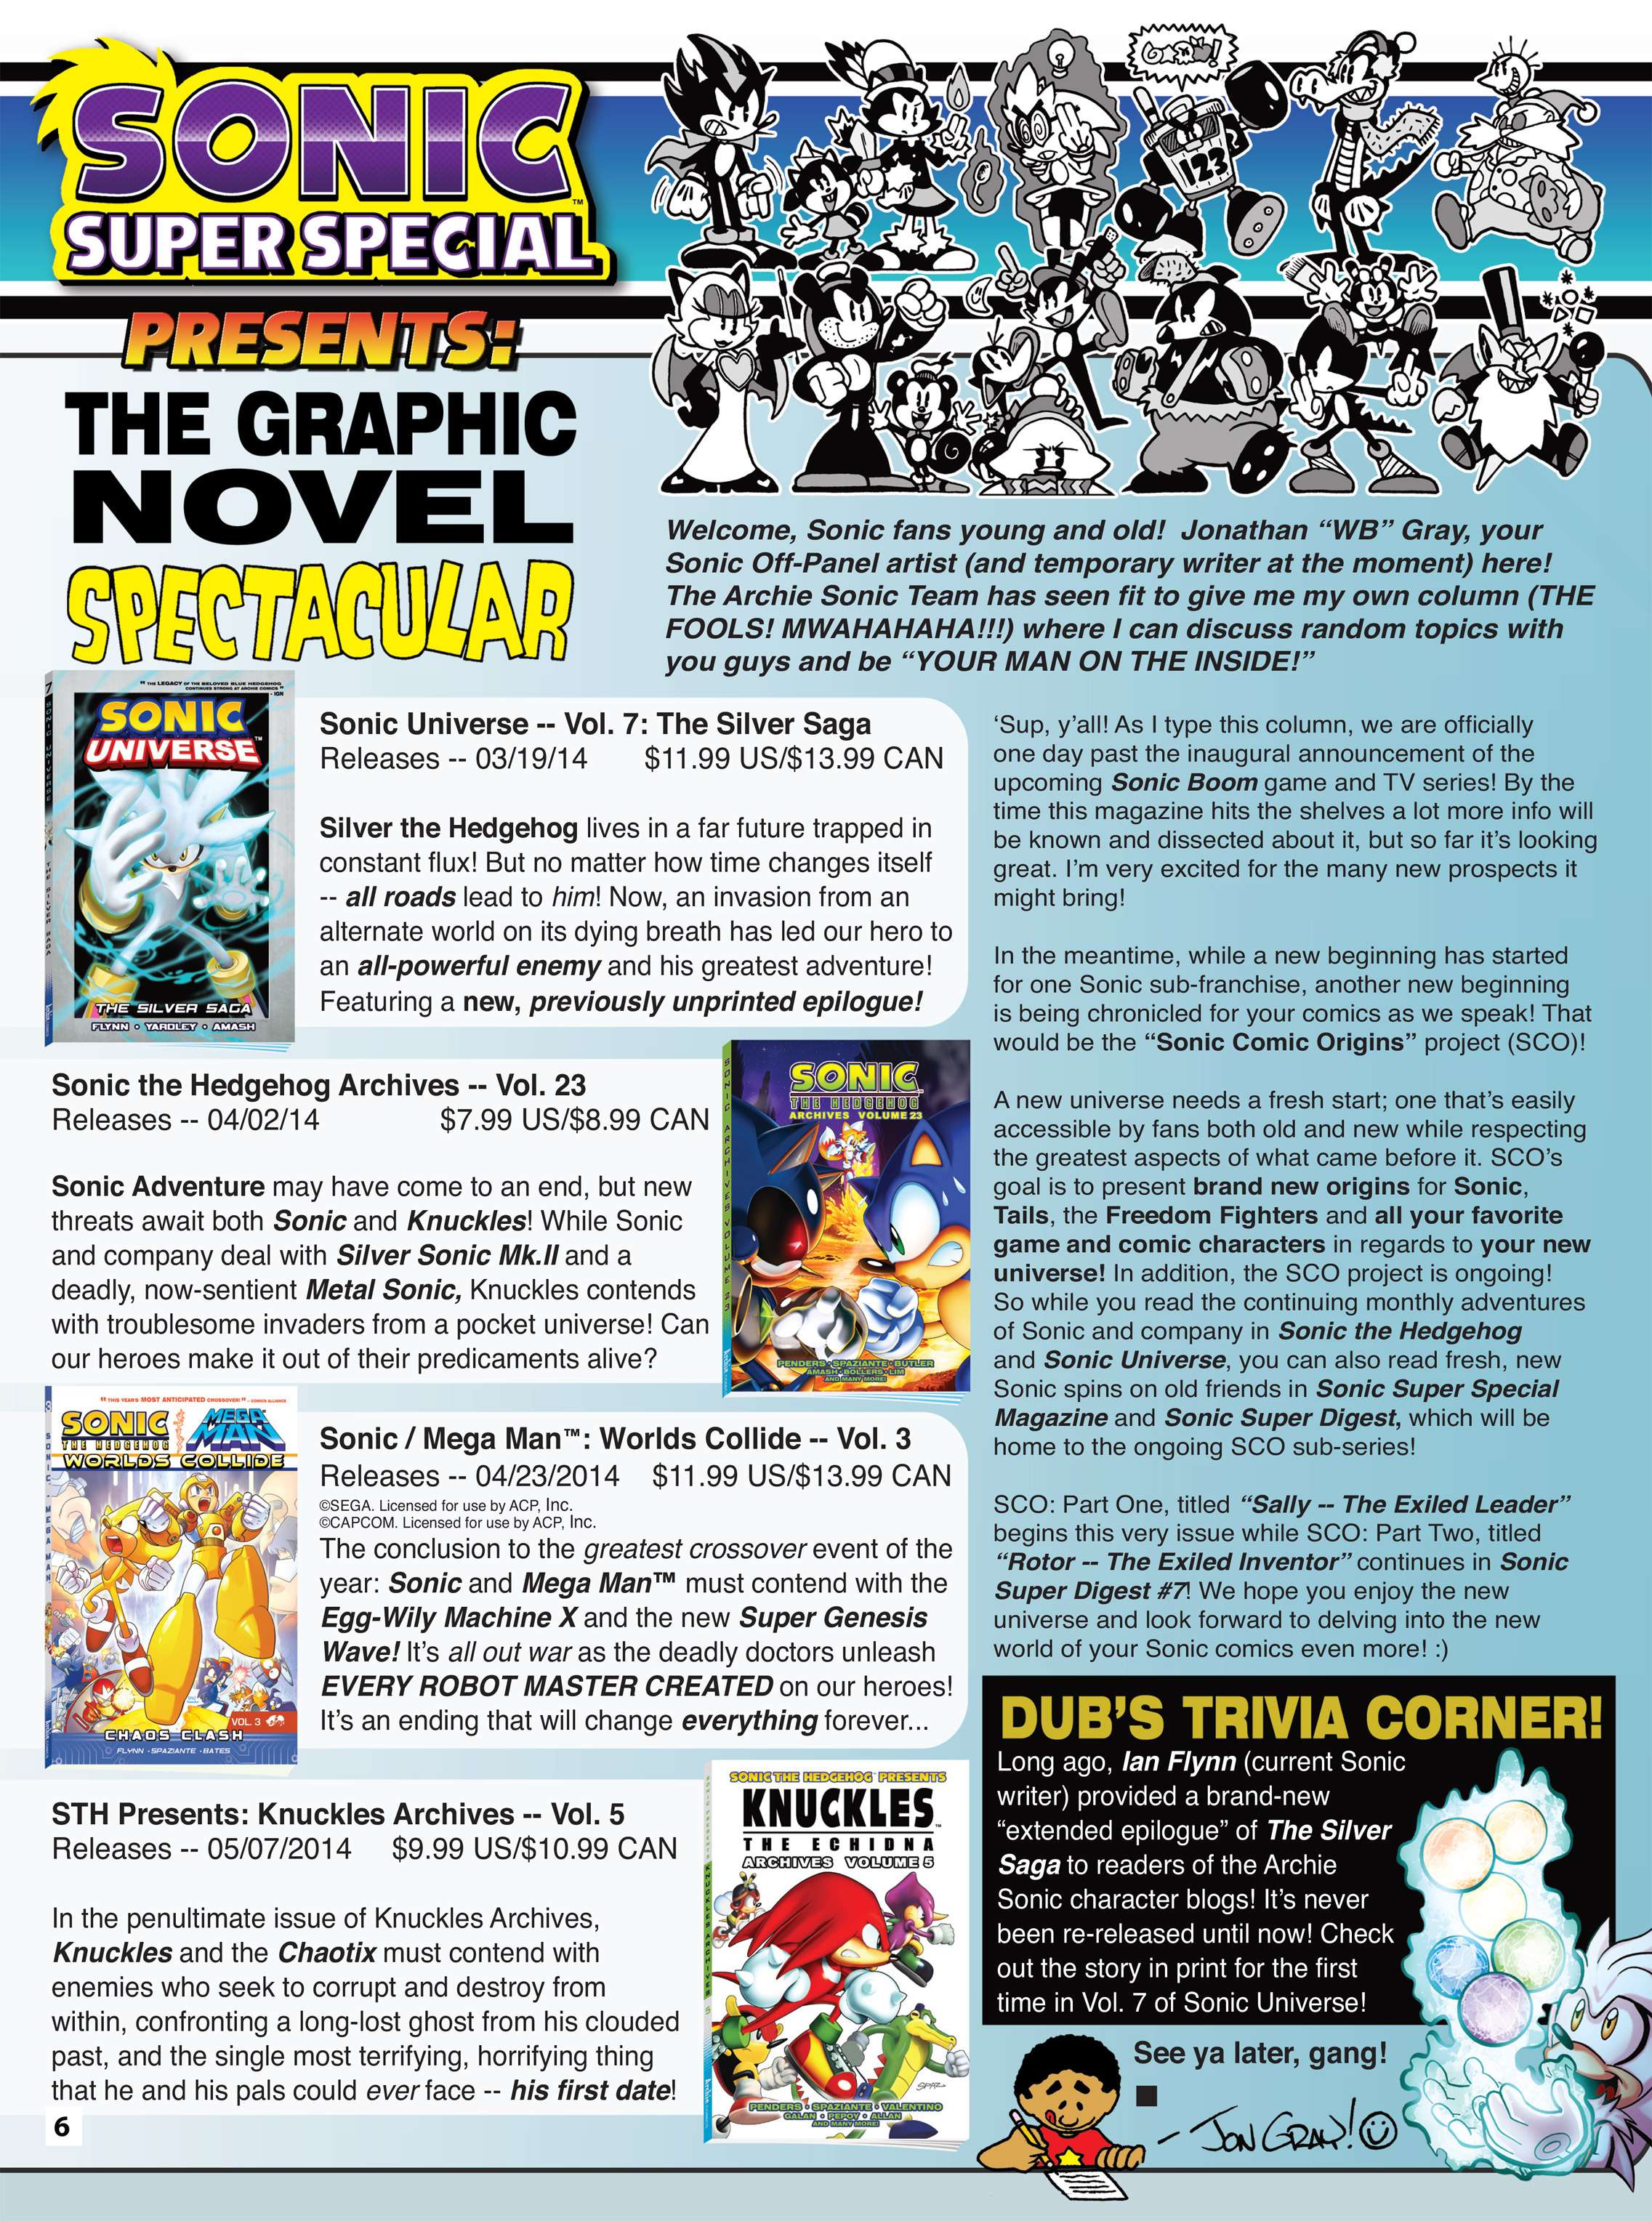 Sonic Super Special Magazine Issue 1, Mobius Encyclopaedia